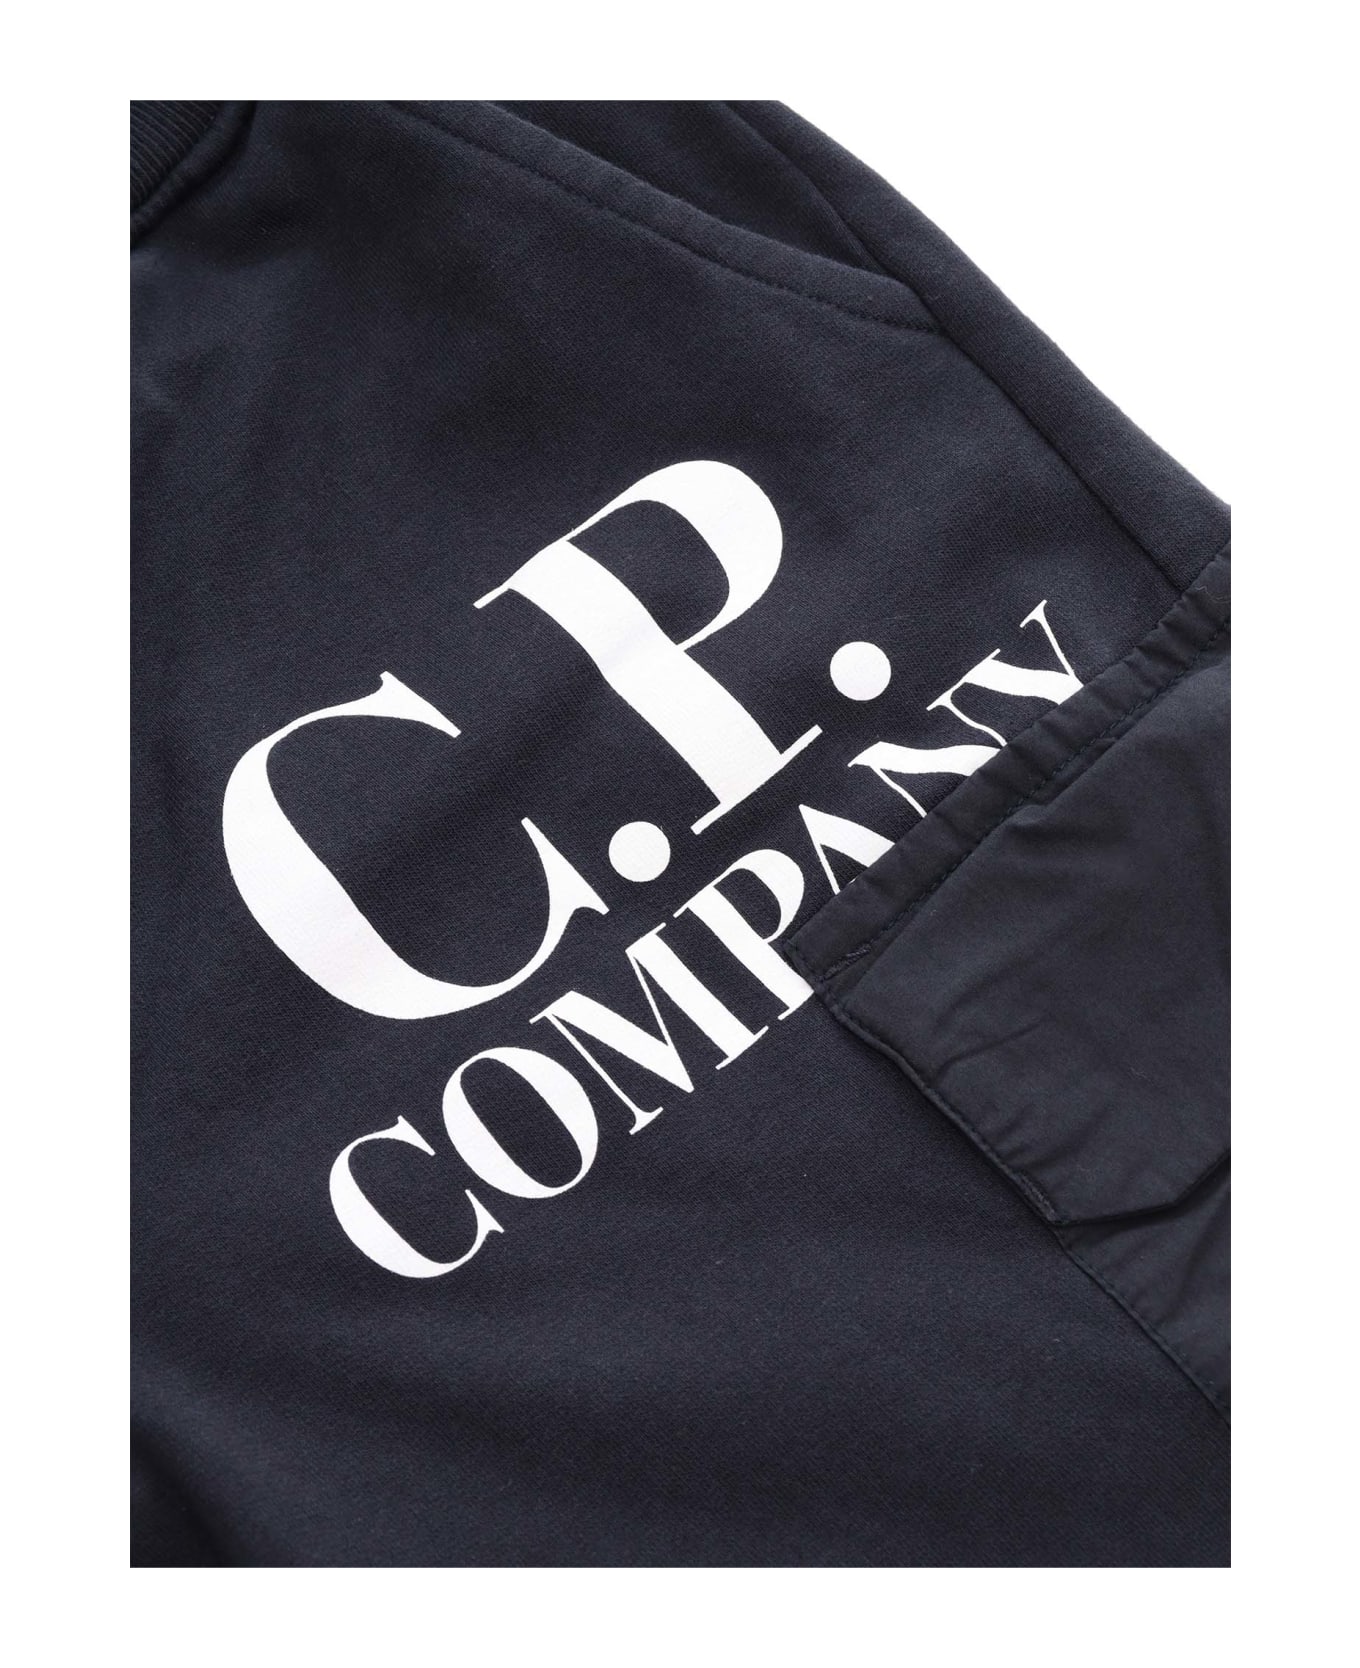 C.P. Company Undersixteen Black Sweatshirt Pants - BLUE ボトムス